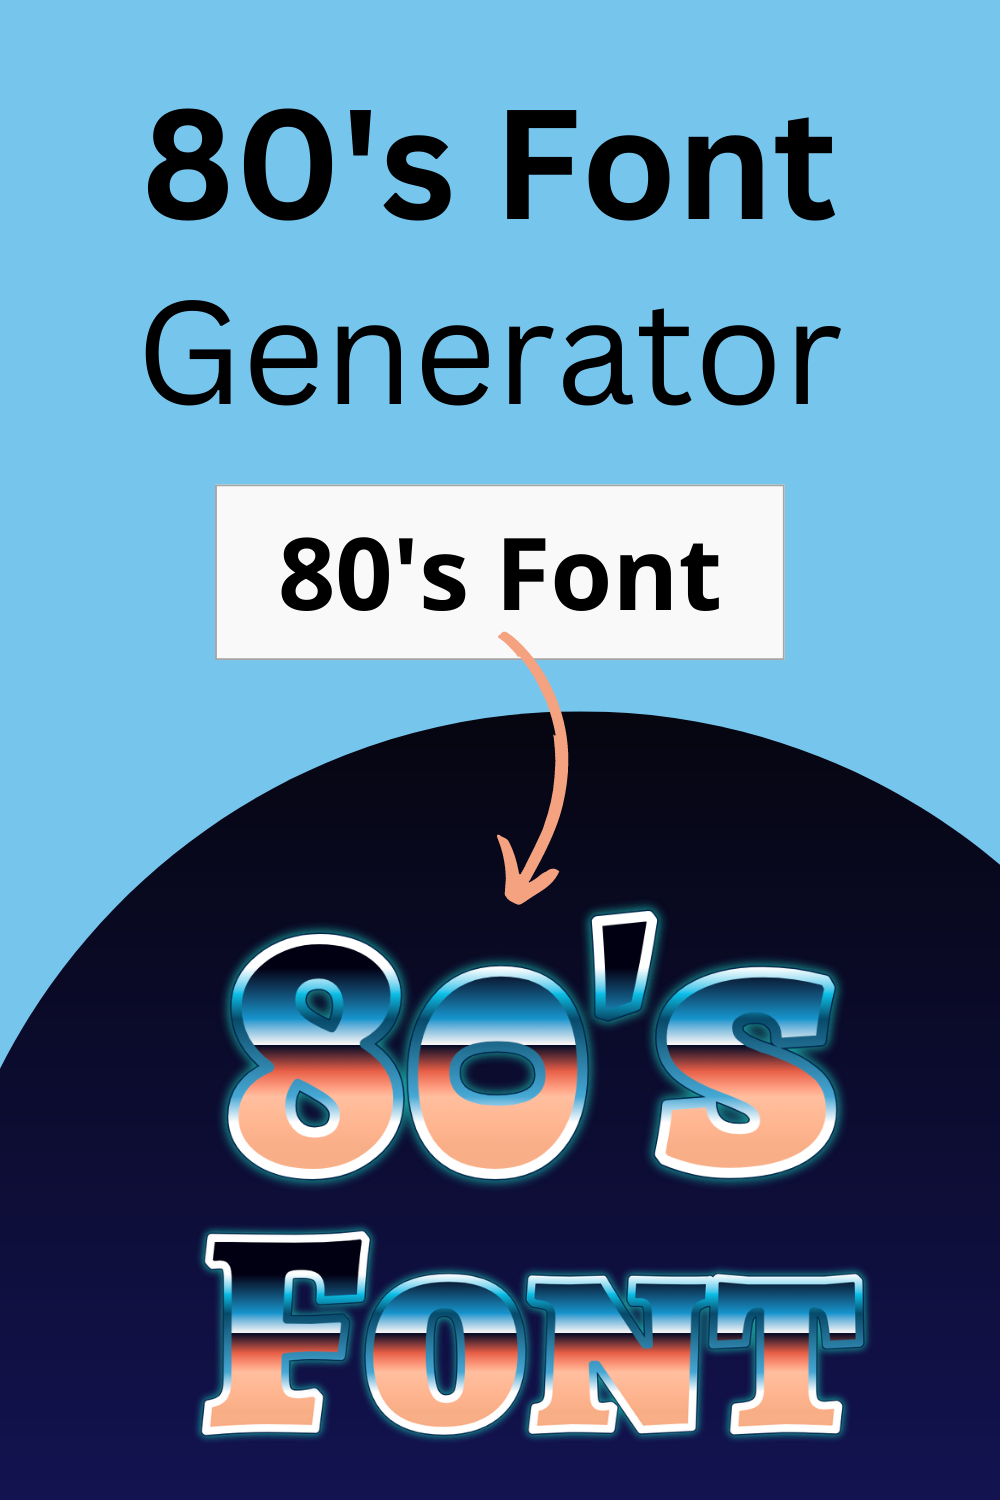 80s font generator. 80s text effect, typography, design, alphabet, retro, style, anni, aesthetic, 80s retro name generator, 80's text generator, vintage font generator, retro word art generator